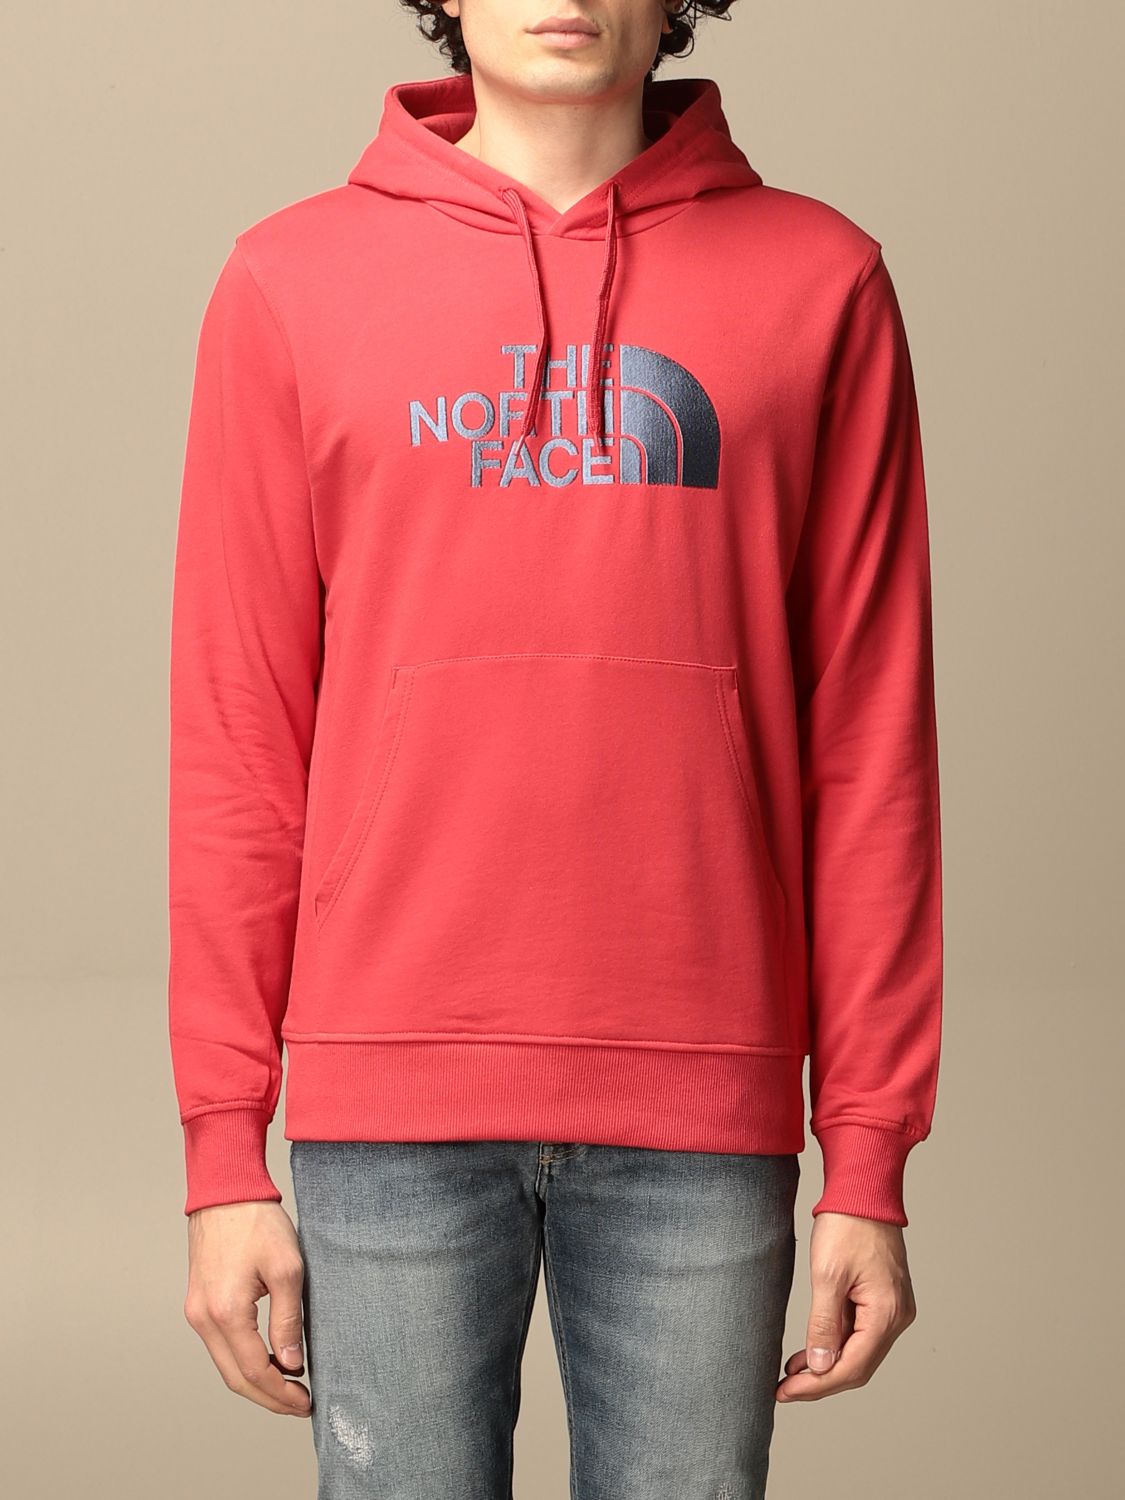 Sweatshirt The North Face: Sweatshirt herren The North Face rot 1